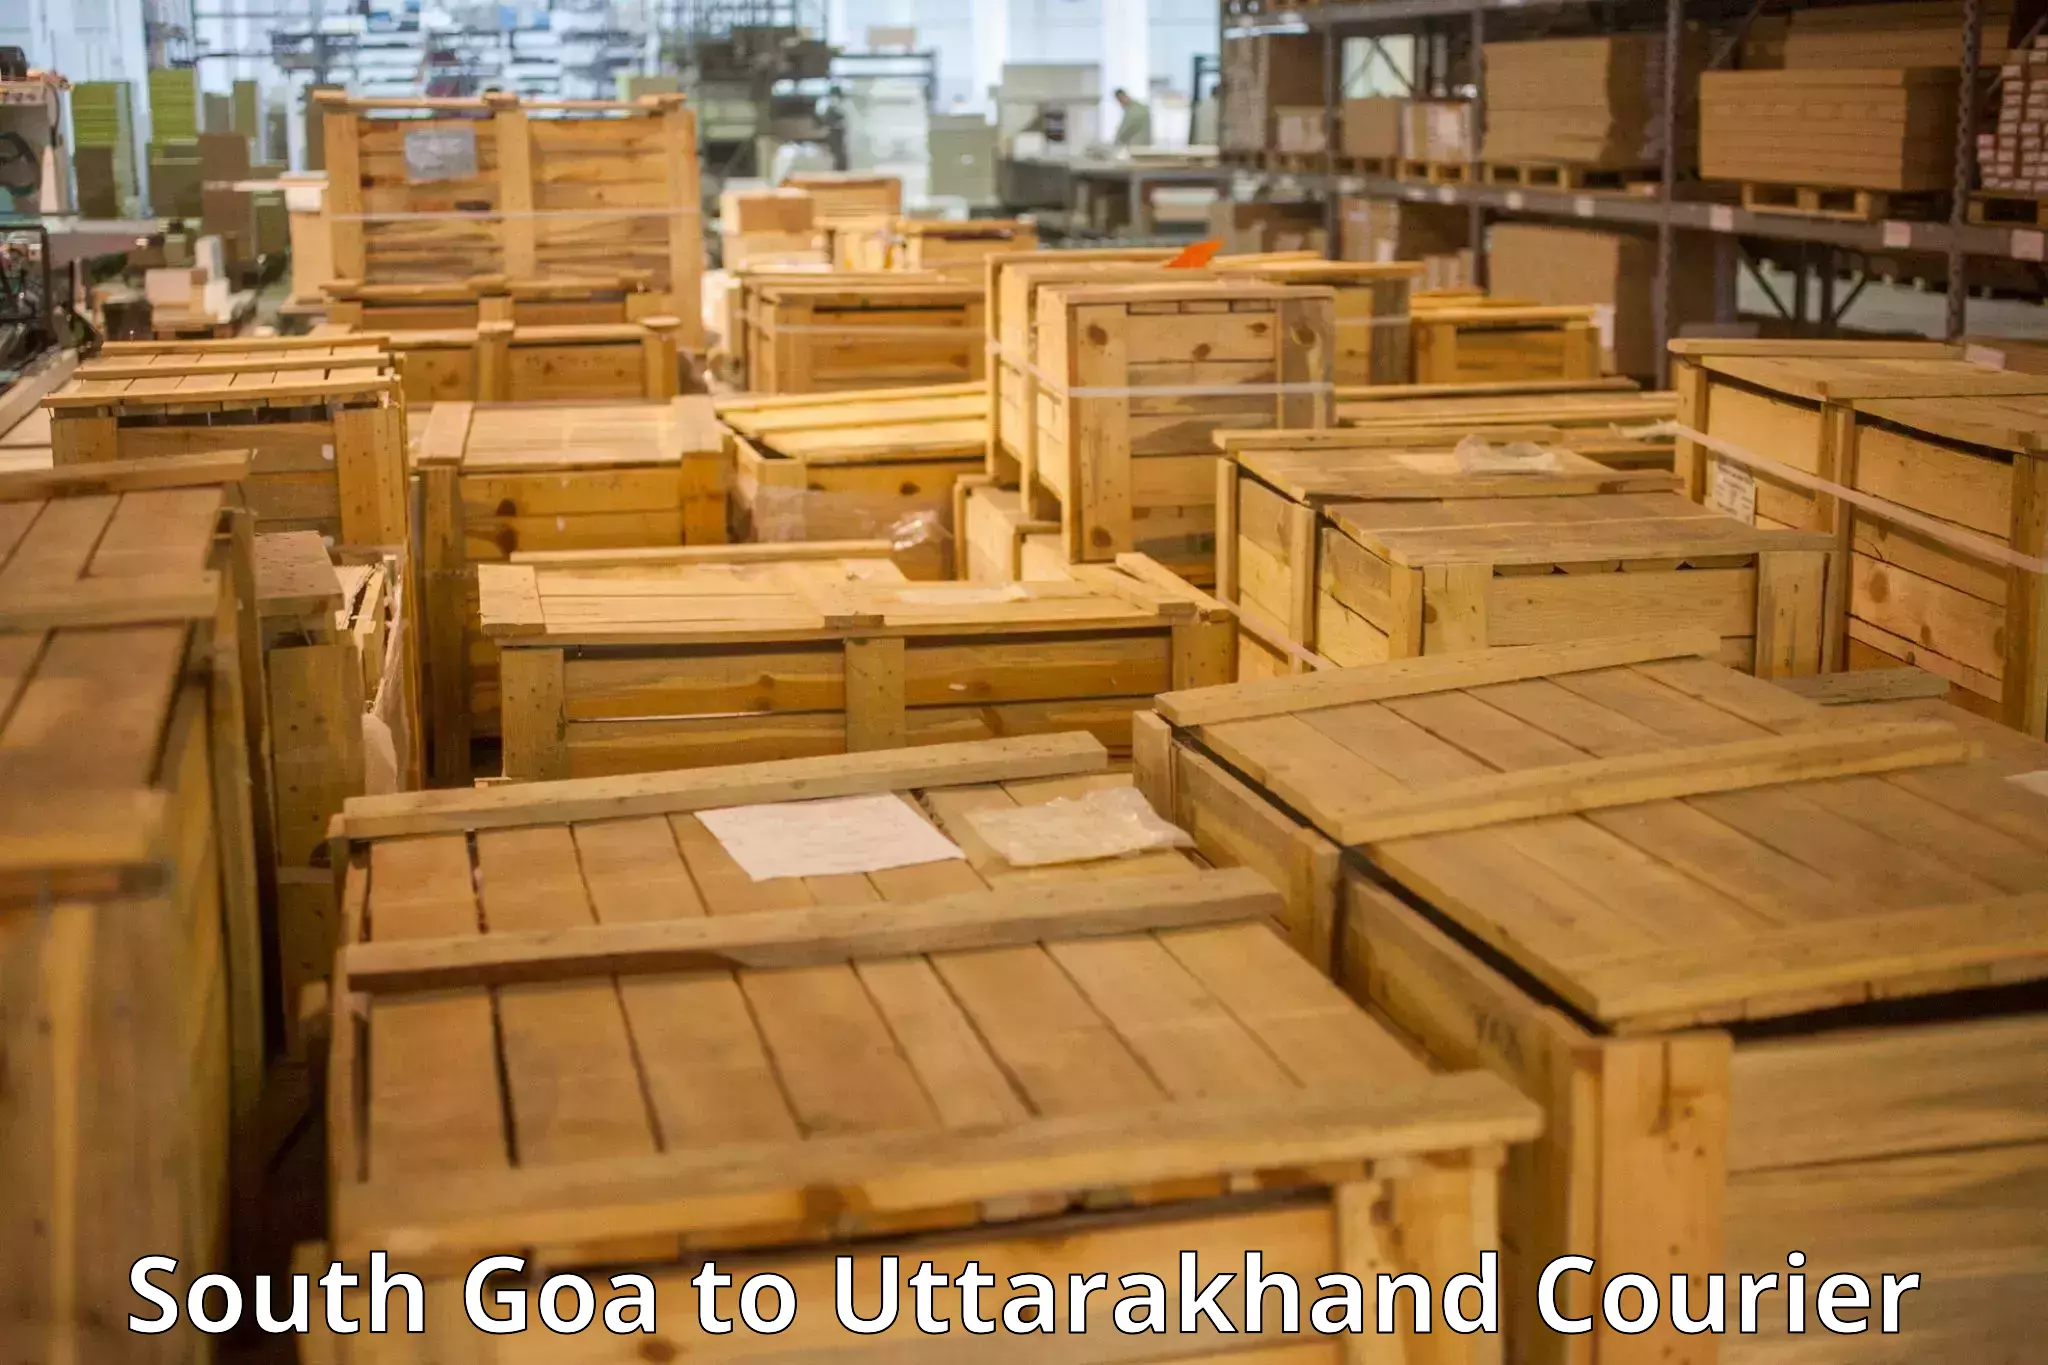 Baggage transport innovation South Goa to Uttarakhand